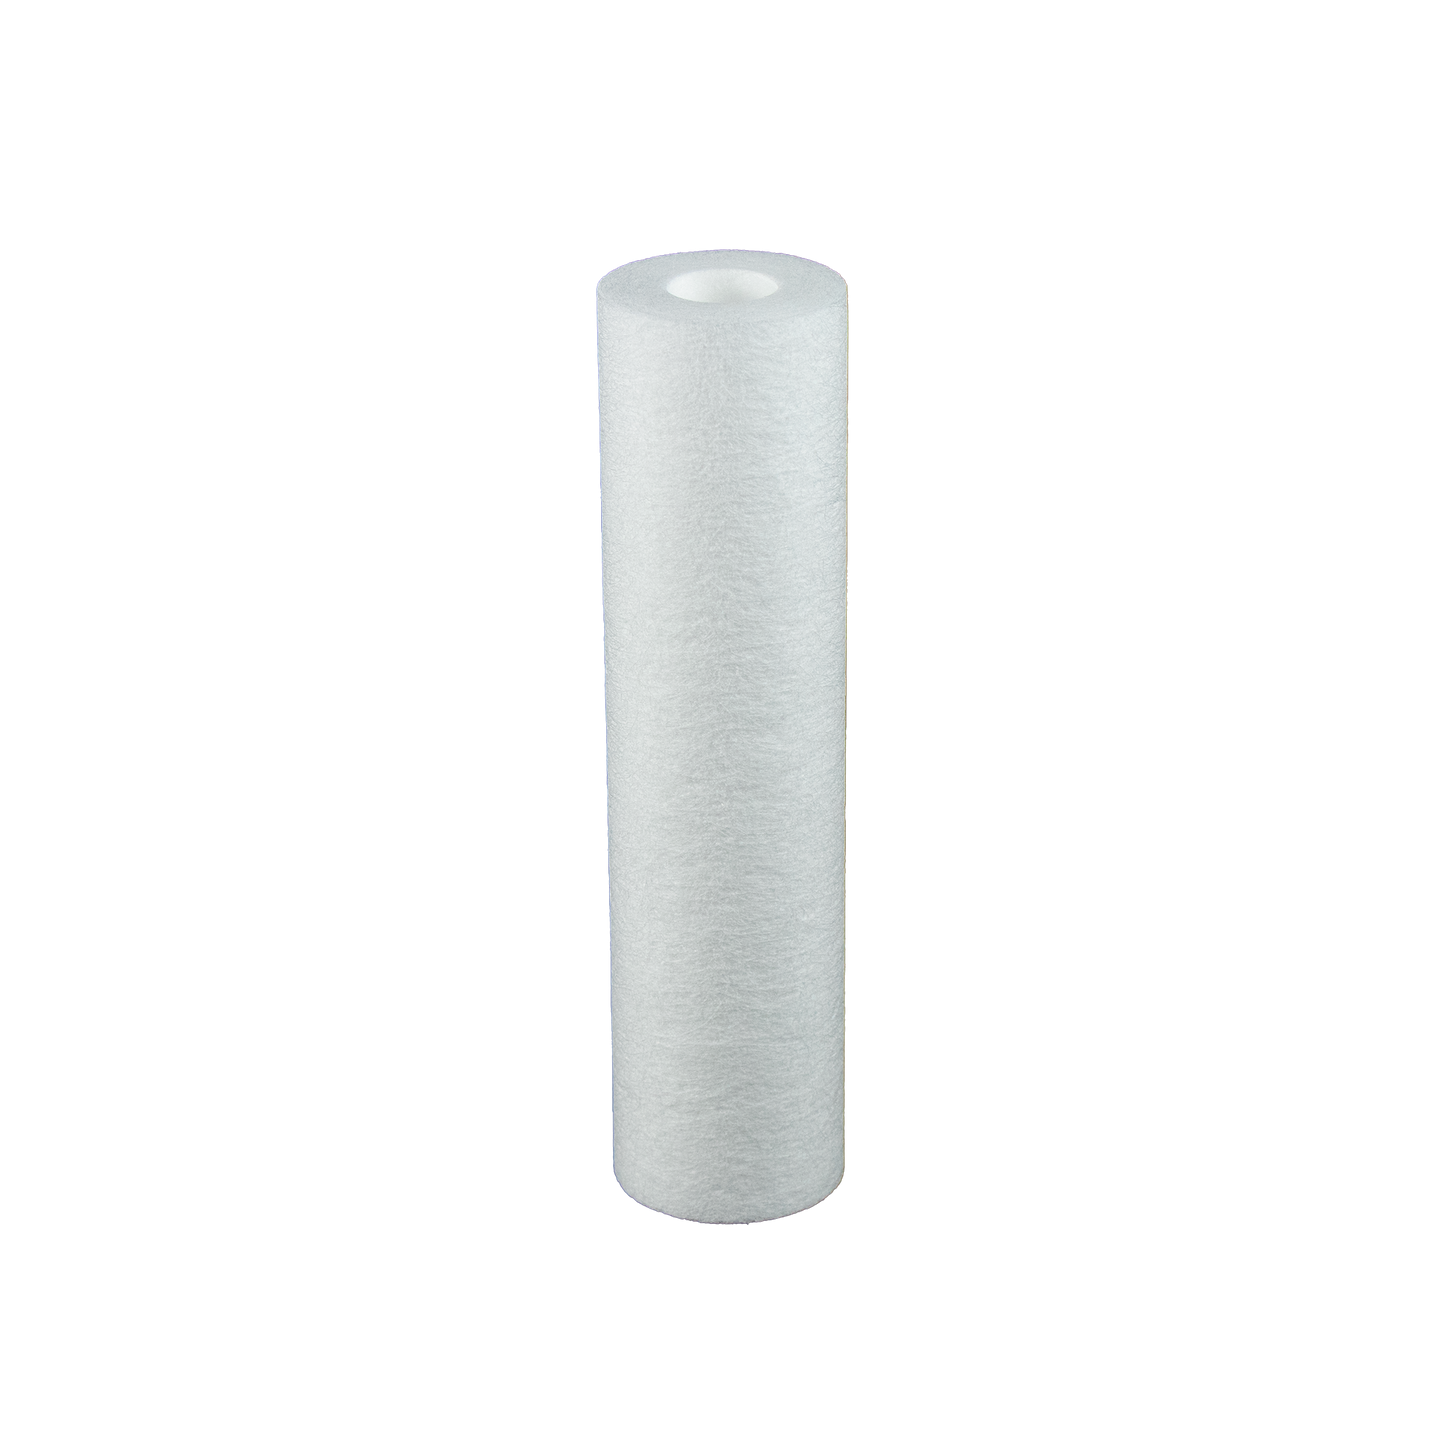 10" x 5 micron standard particulate filter